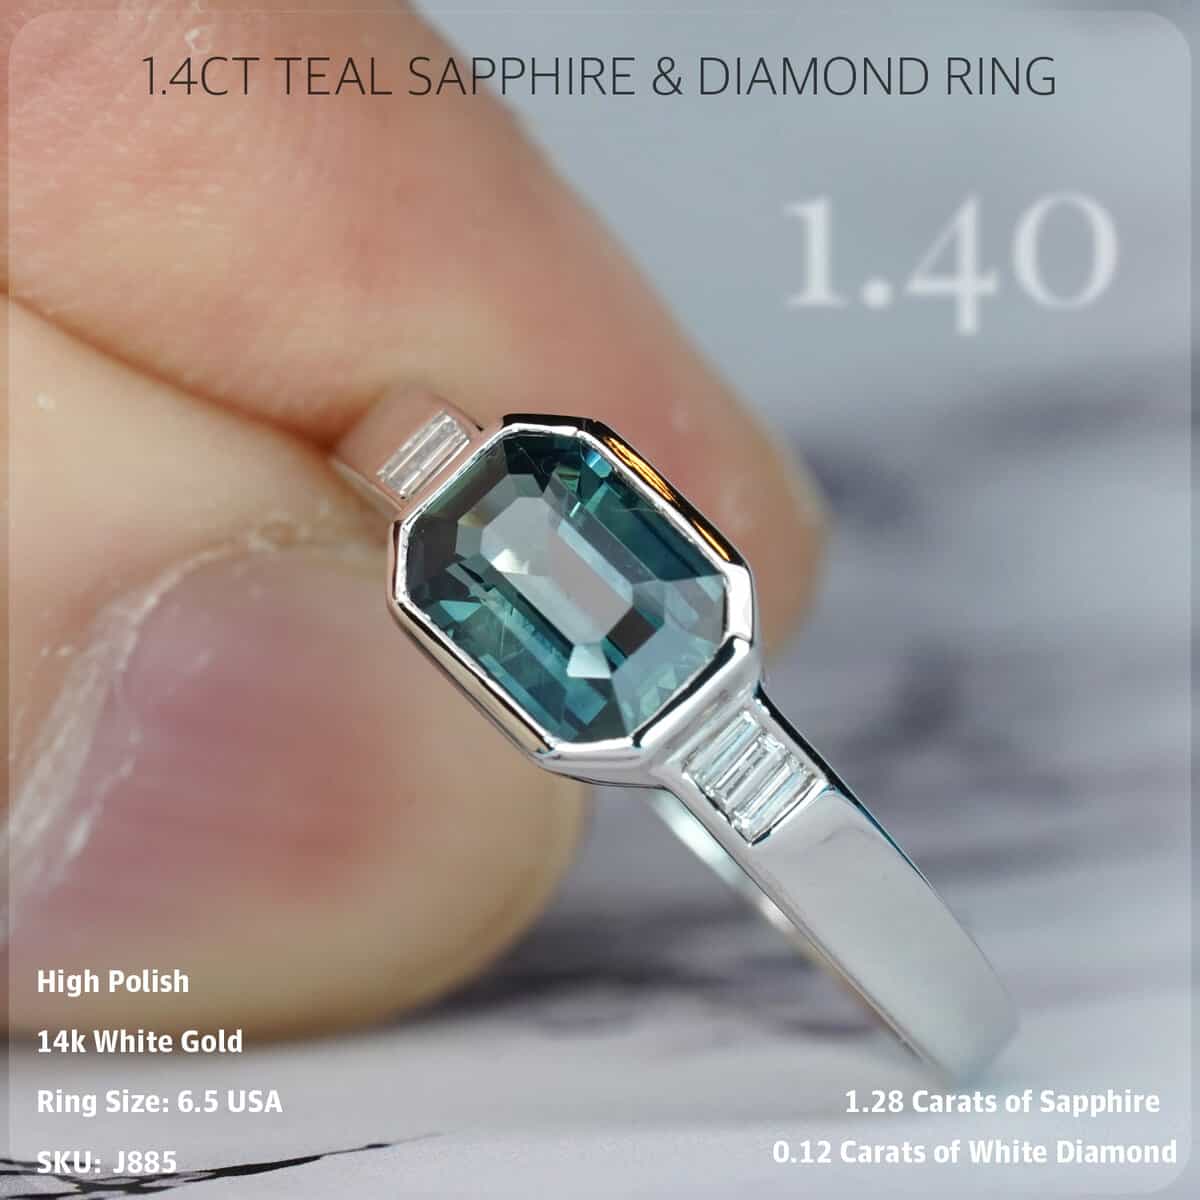 1.4CT Teal Sapphire & Diamond Ring